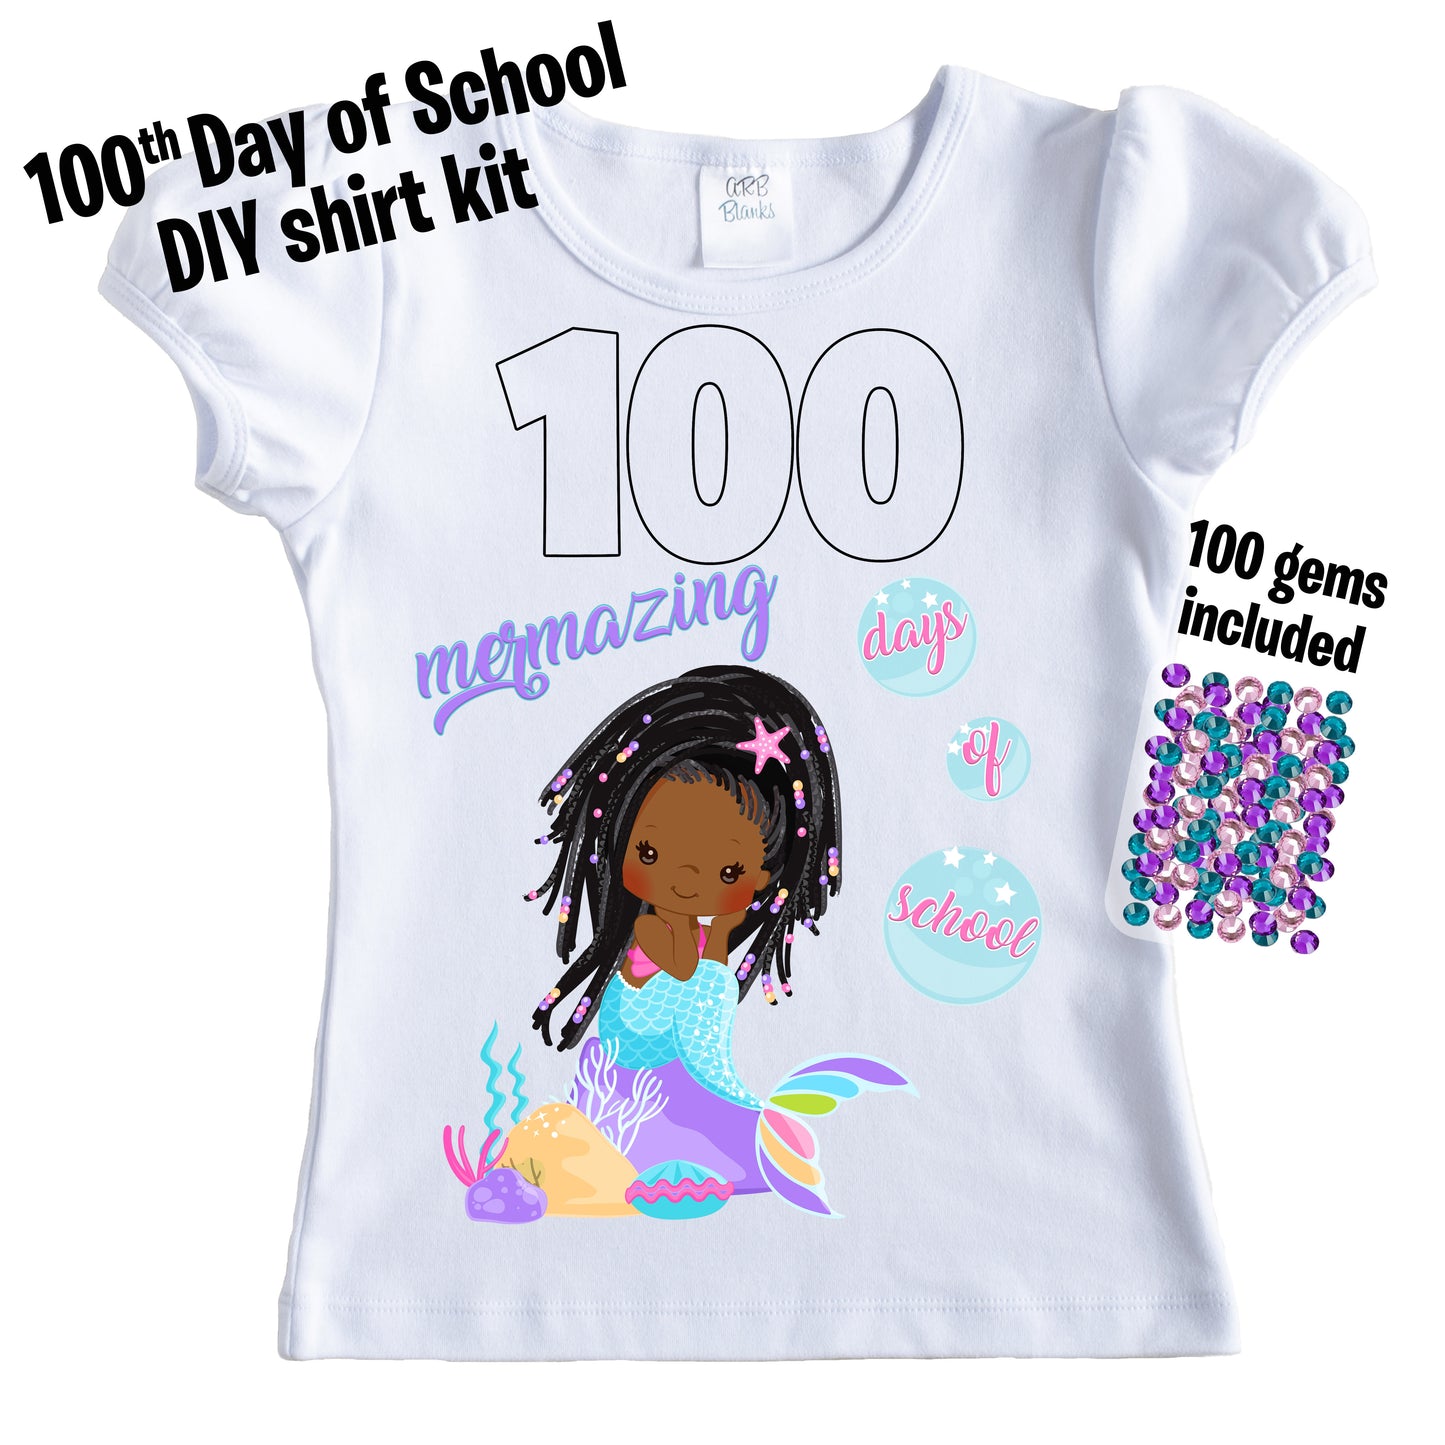 100 mermazing day of school shirt kit